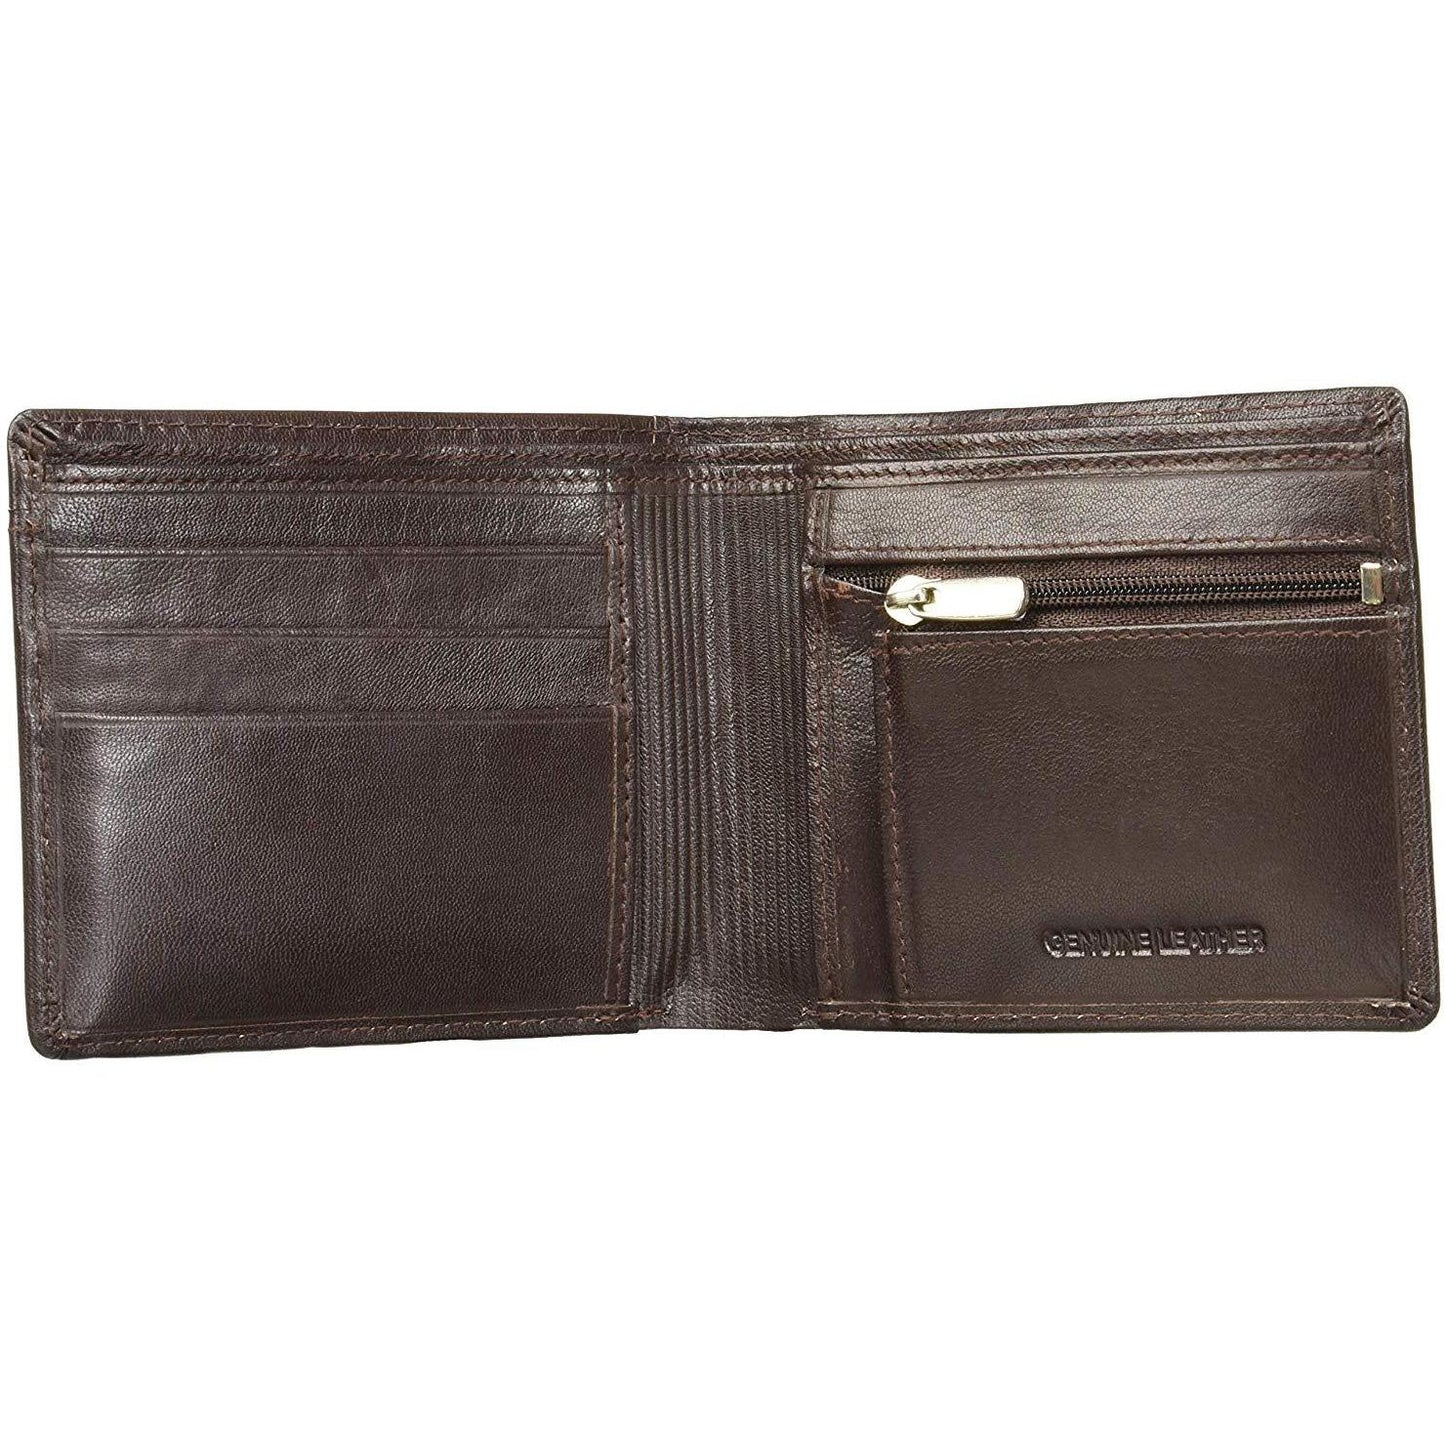 Brown Colour Bi-Fold Italian Leather Slim Wallet ( 5 Card Slot + 2 Hidden Compartment +Coin Pocket + Cash Compartment )